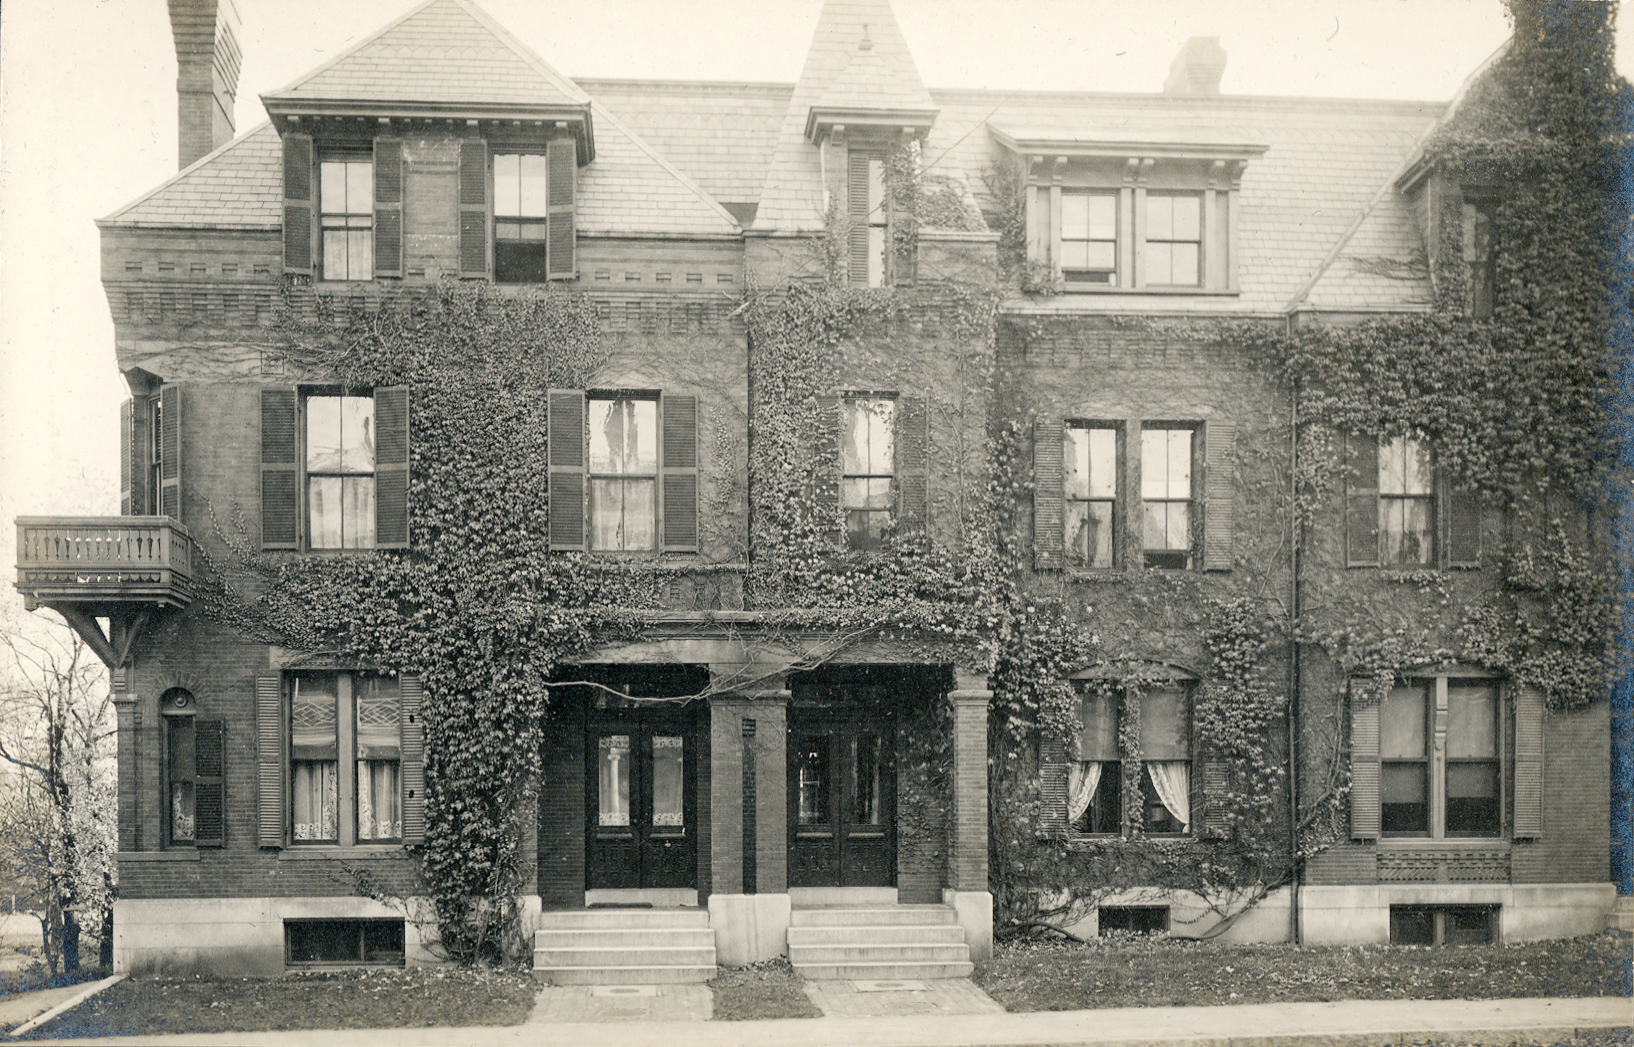 75-77 Monmouth St., circa 1910